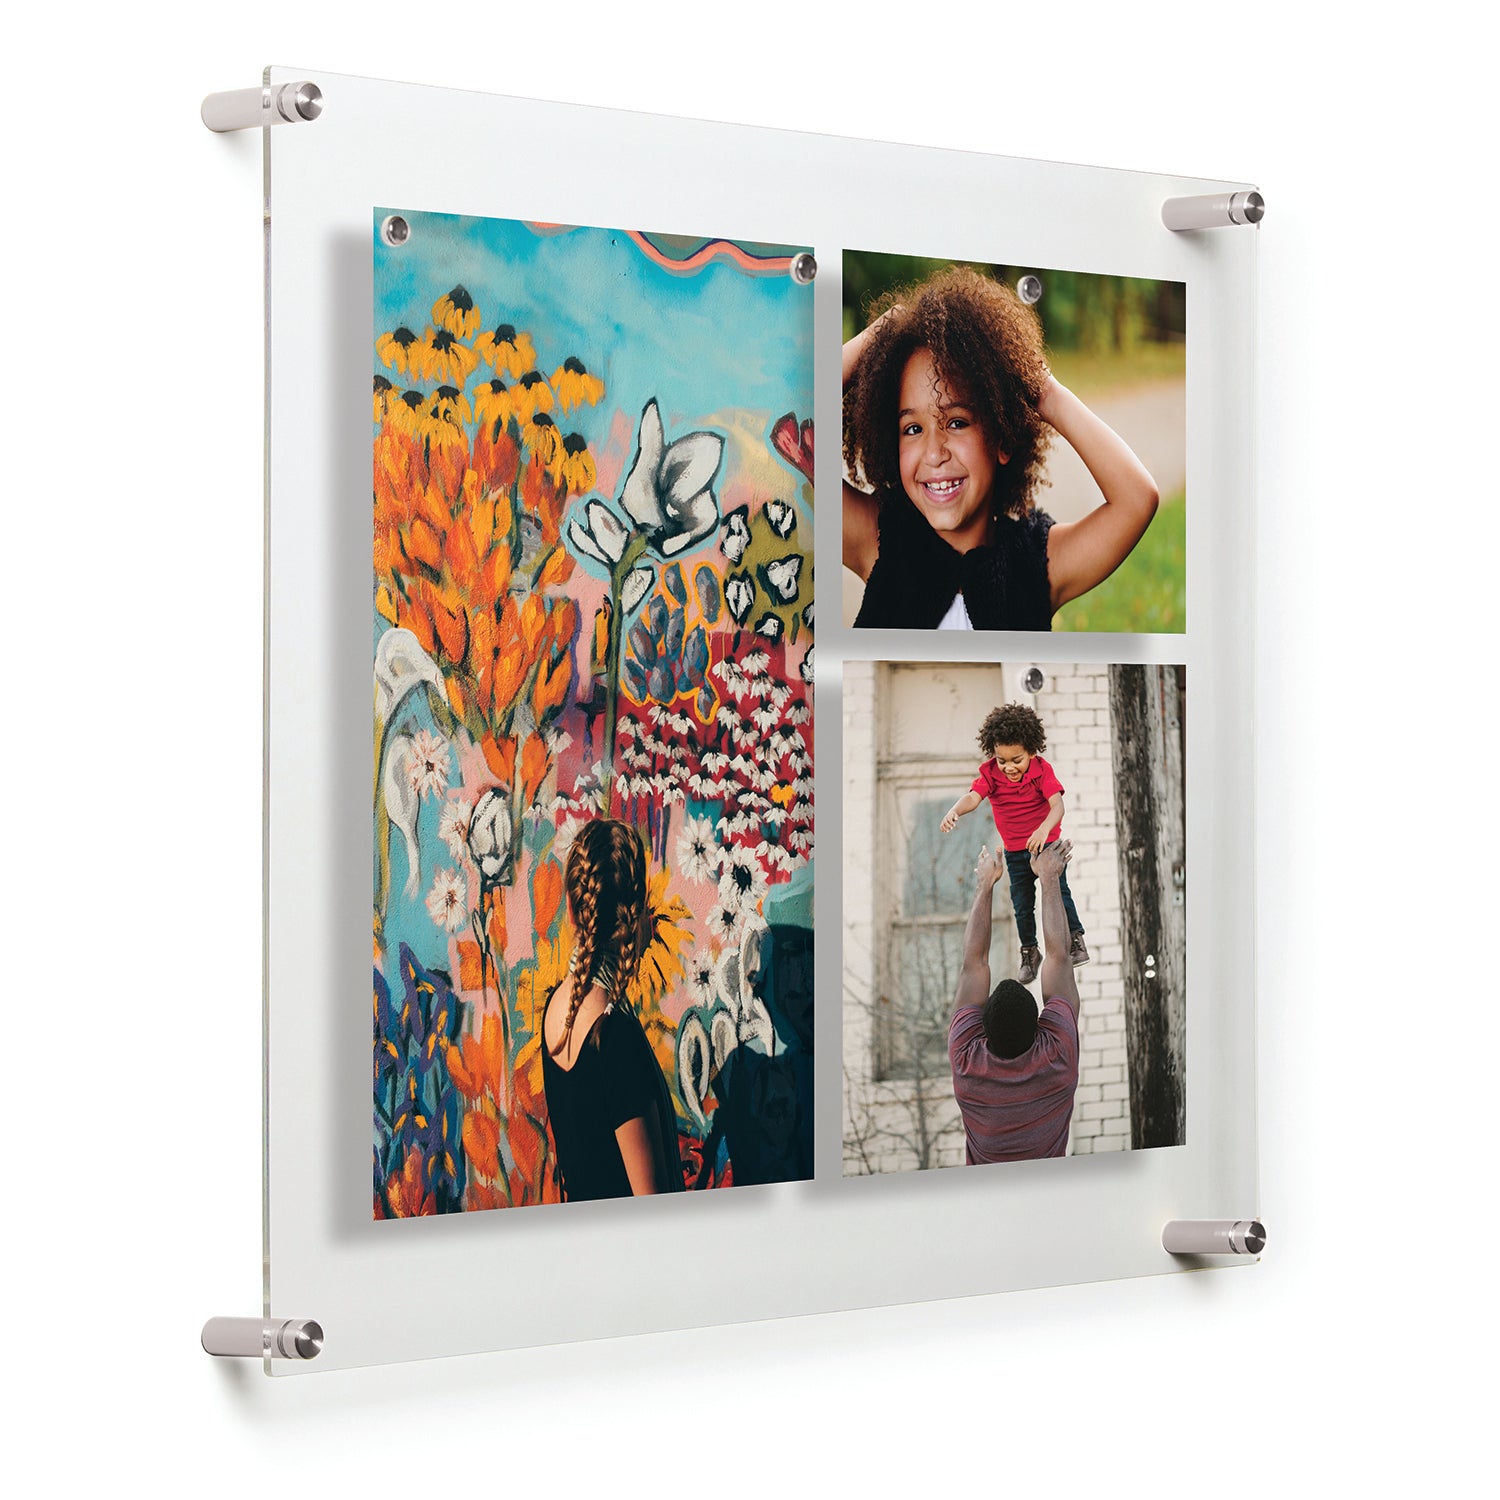 Luxury Brand Design I - Print on Canvas Design Art Format: Black Picture Framed Canvas, Size: 30 H x 30 W x 1 D